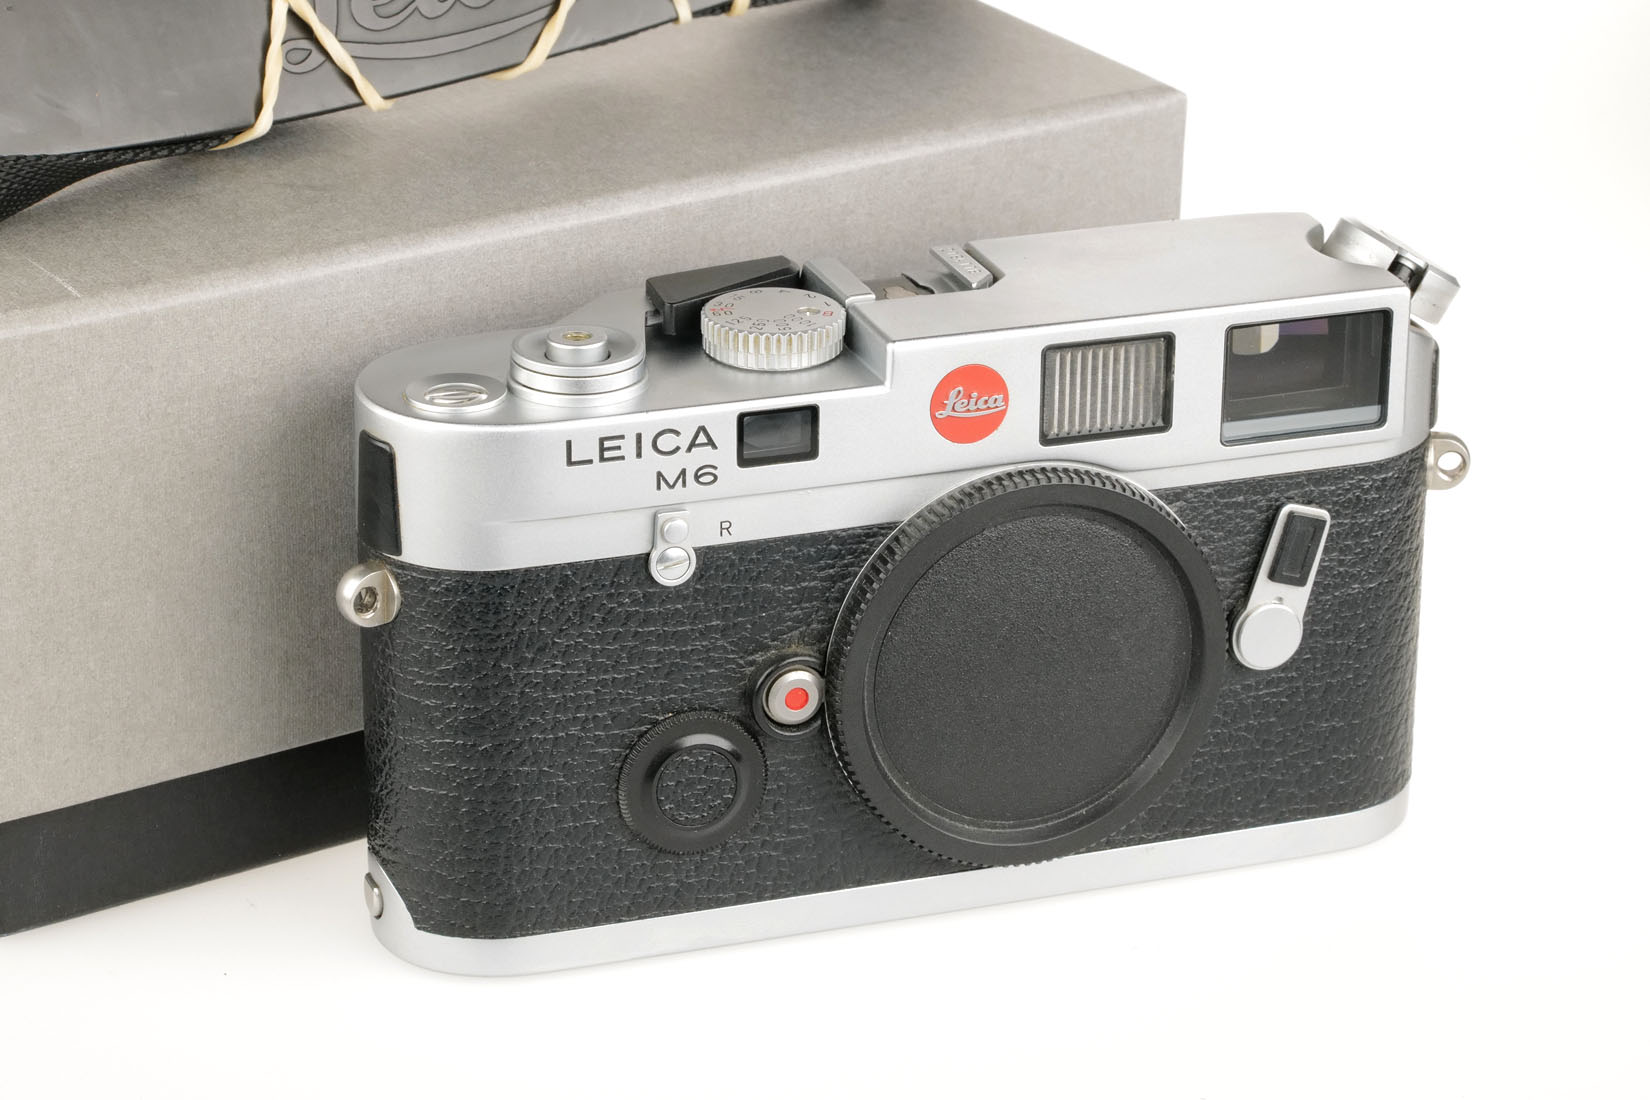 Leica M6, silbern verchromt 10414